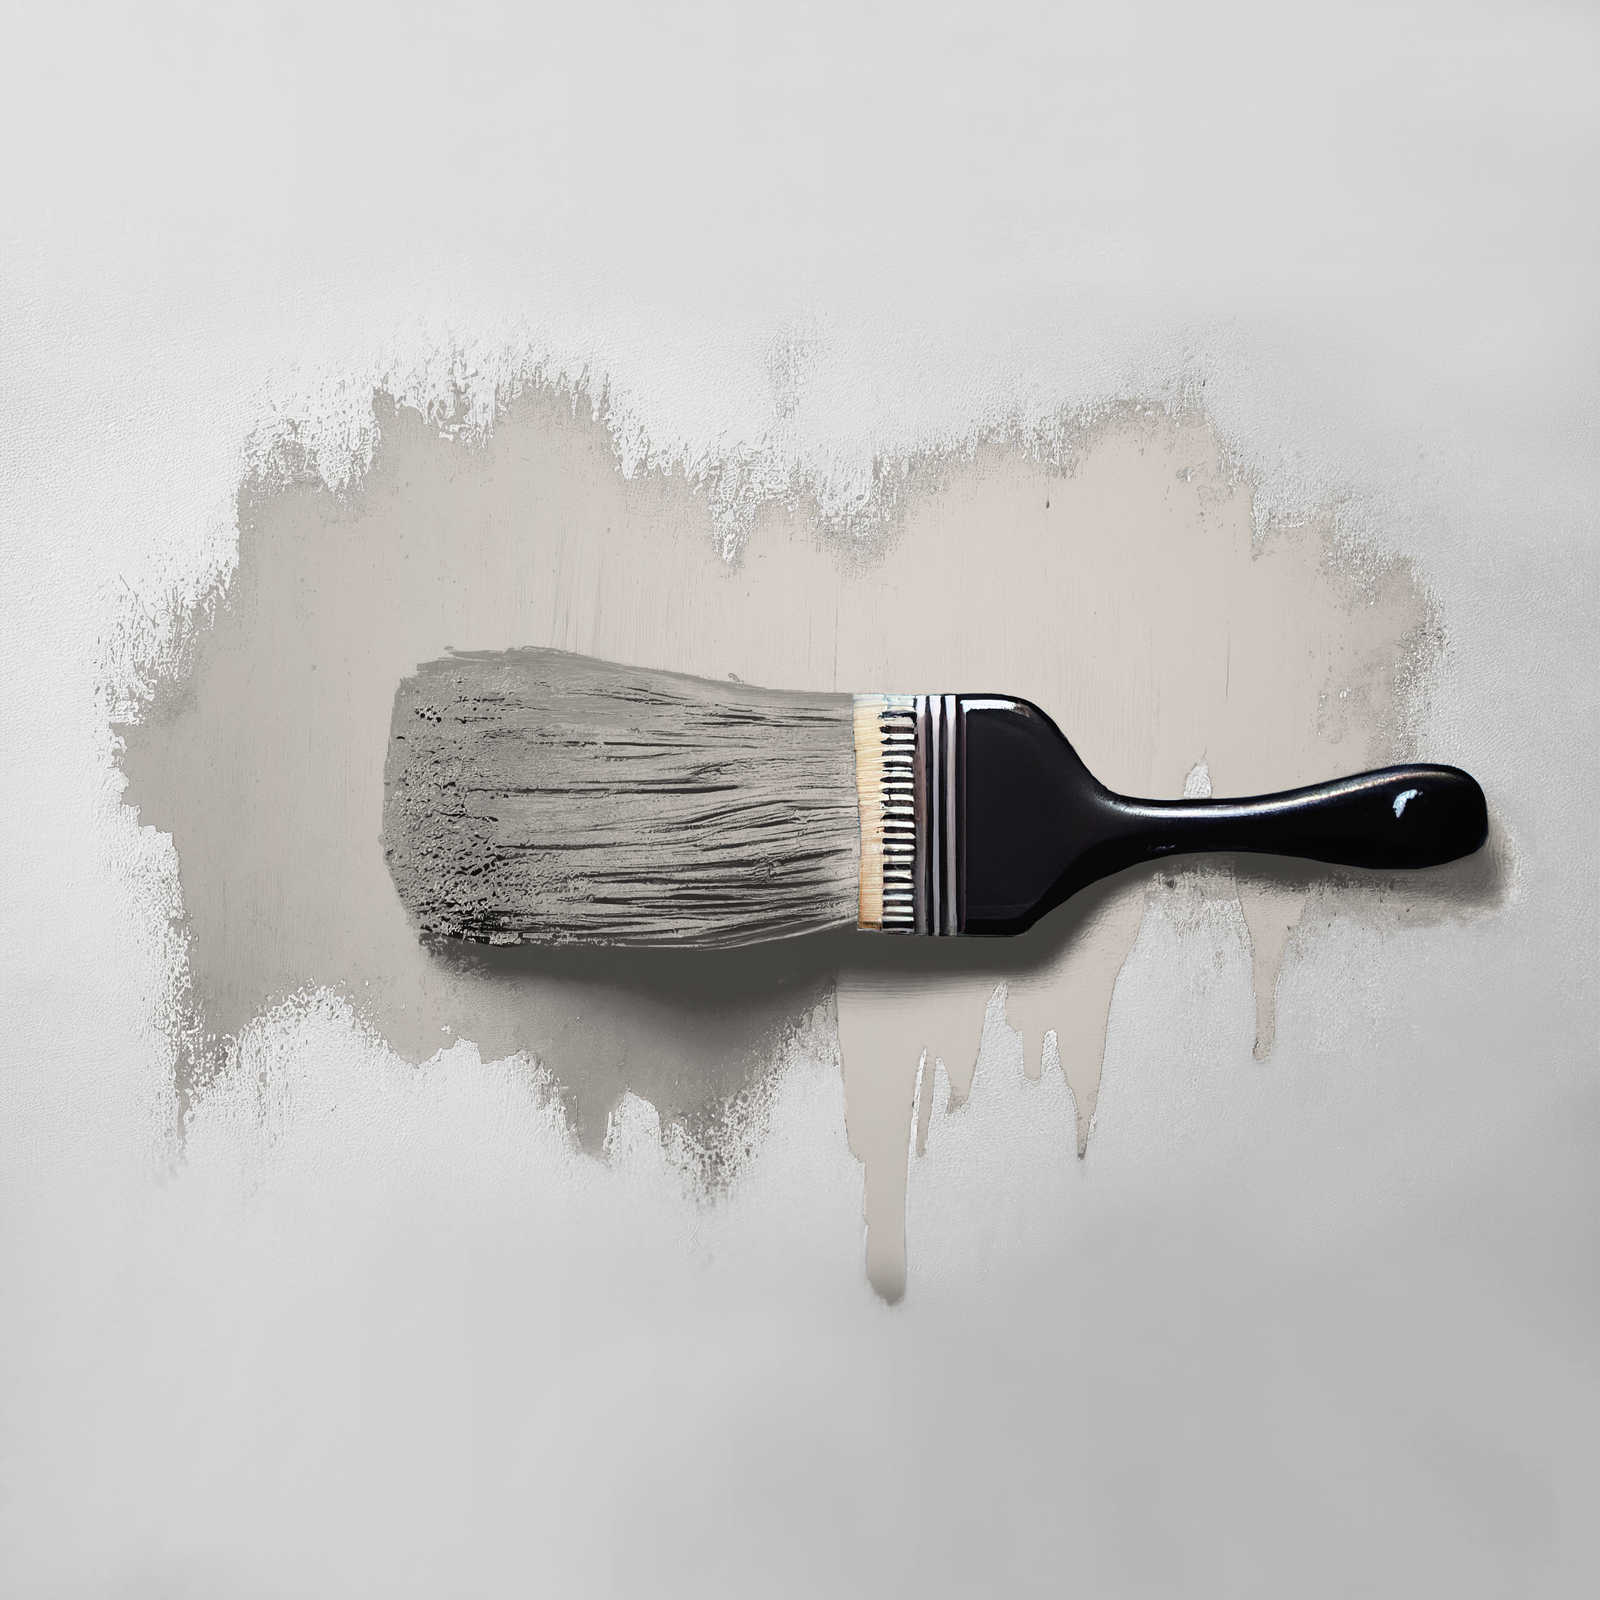             Pintura mural TCK1017 »Oyster Mushroom« en color topo claro – 2,5 litro
        